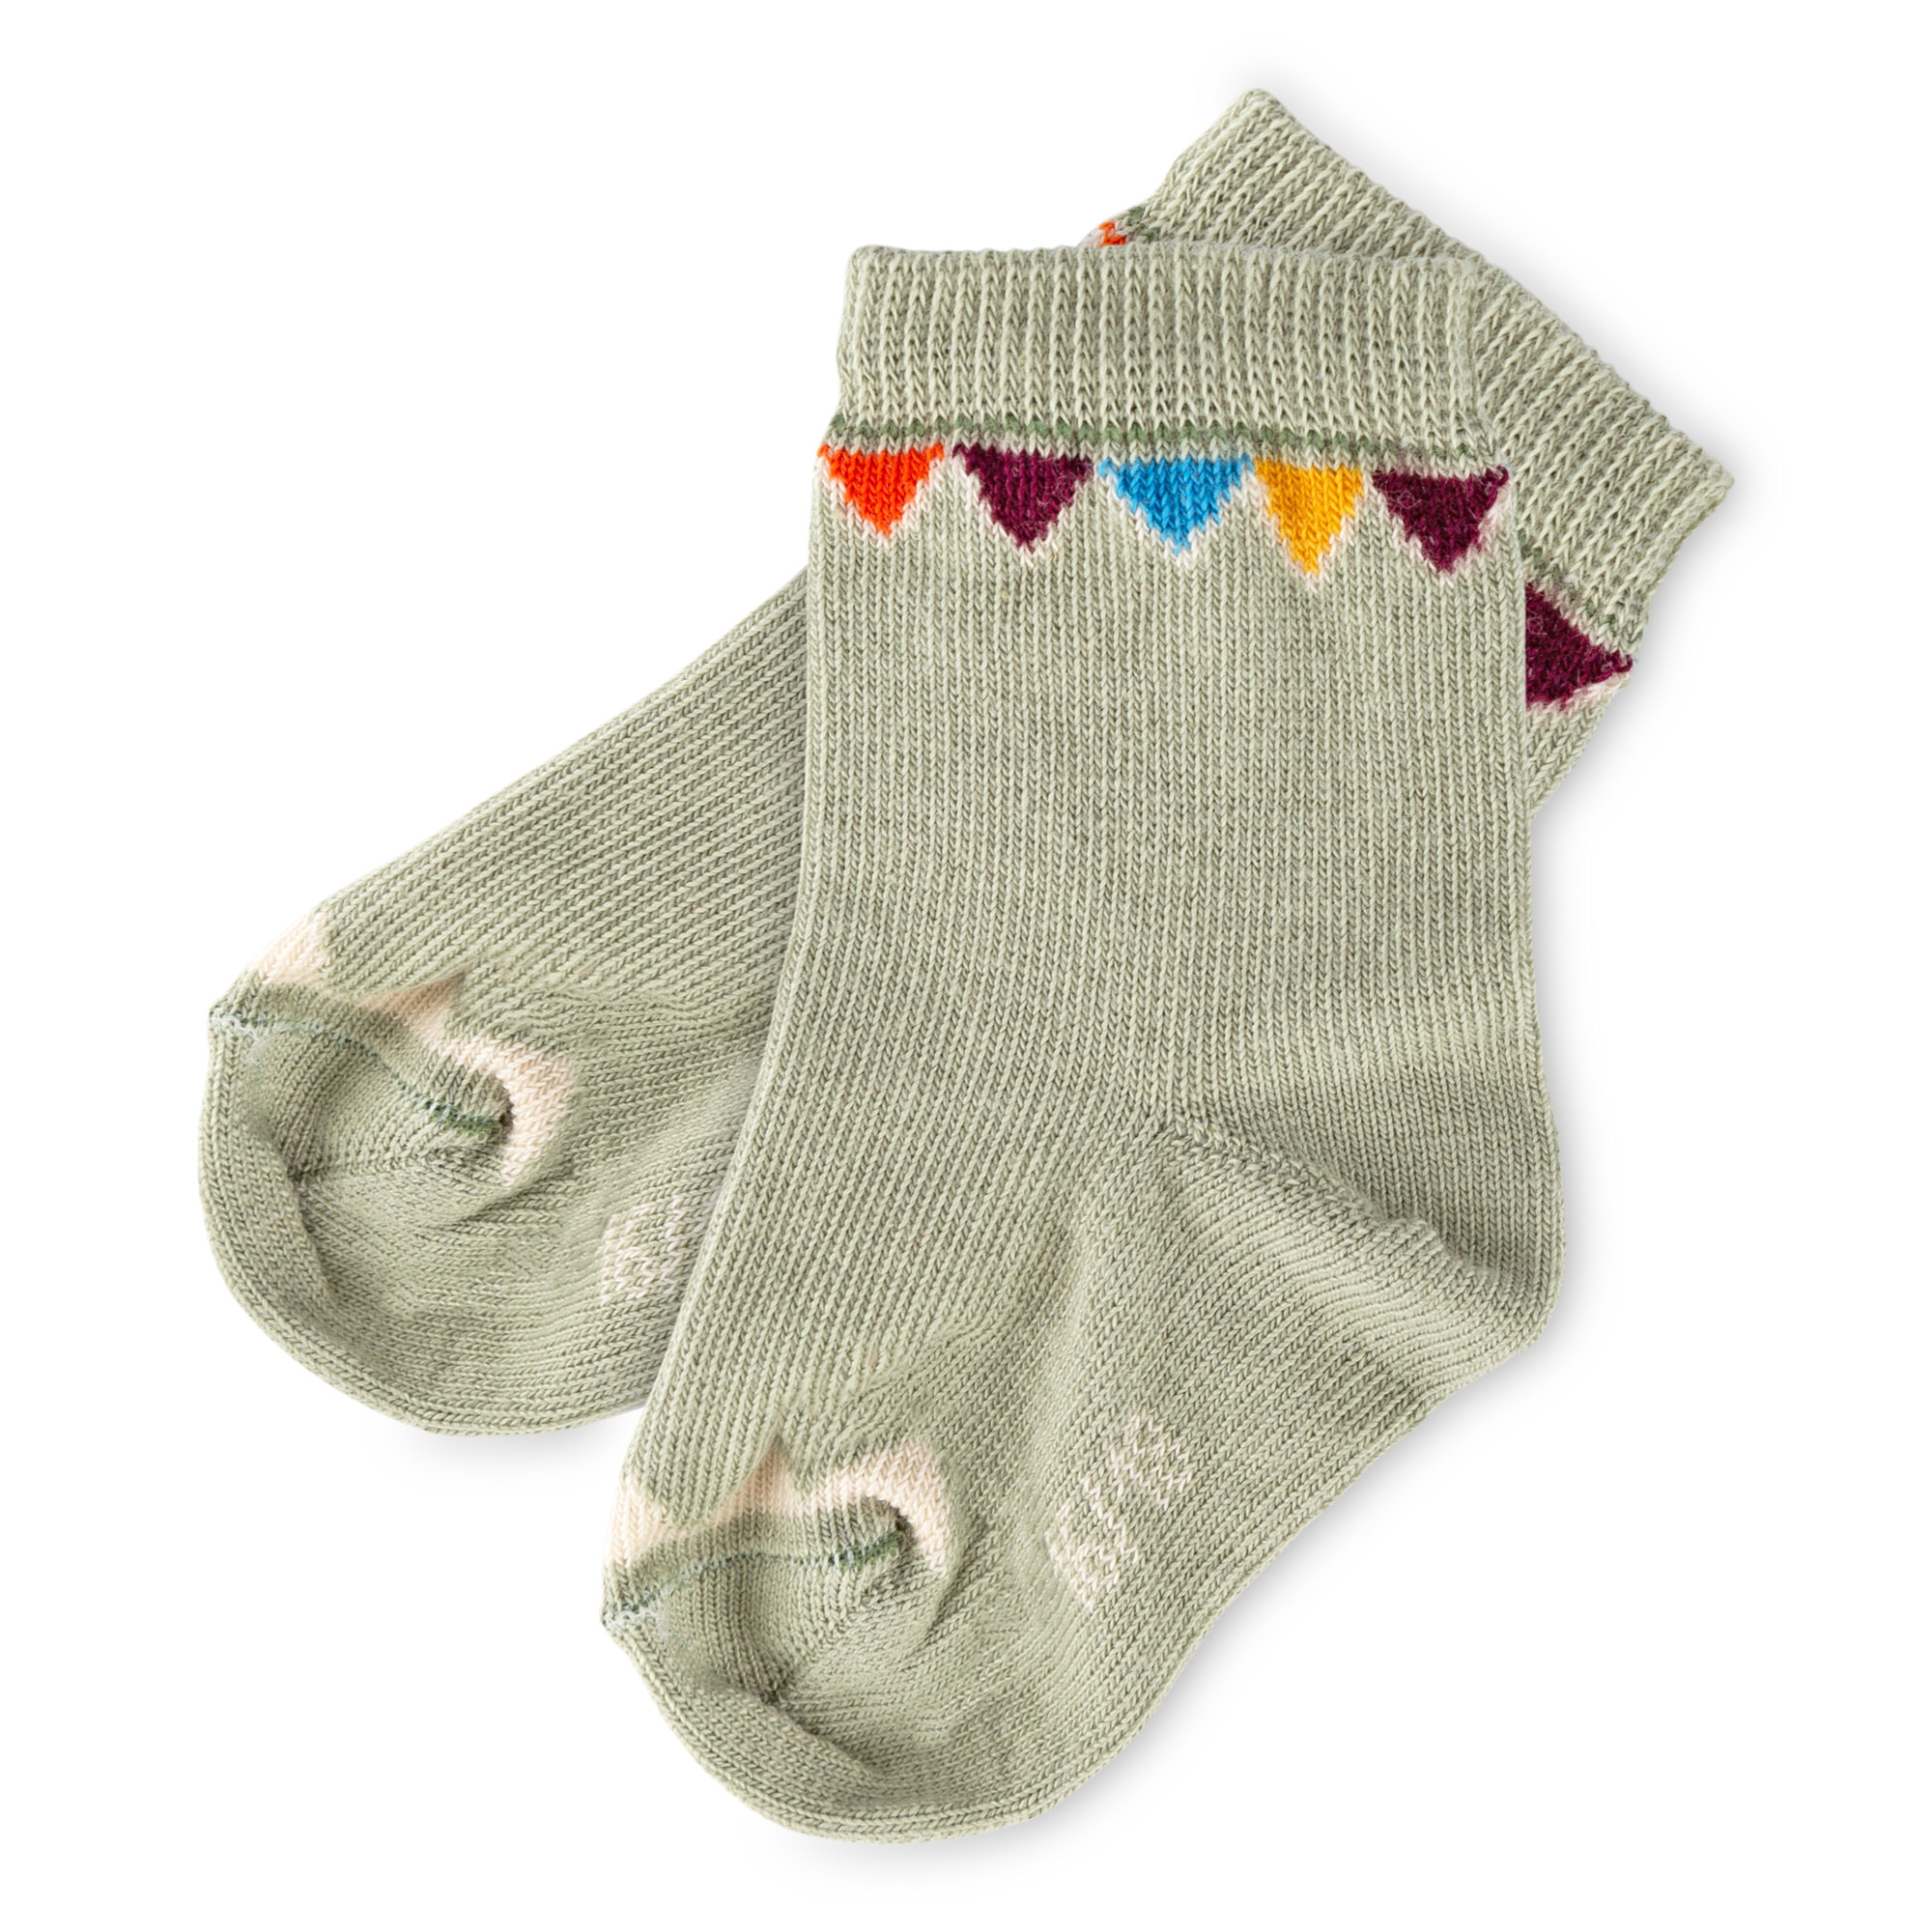 Set of 3 different pairs baby socks, Happy Crocodile